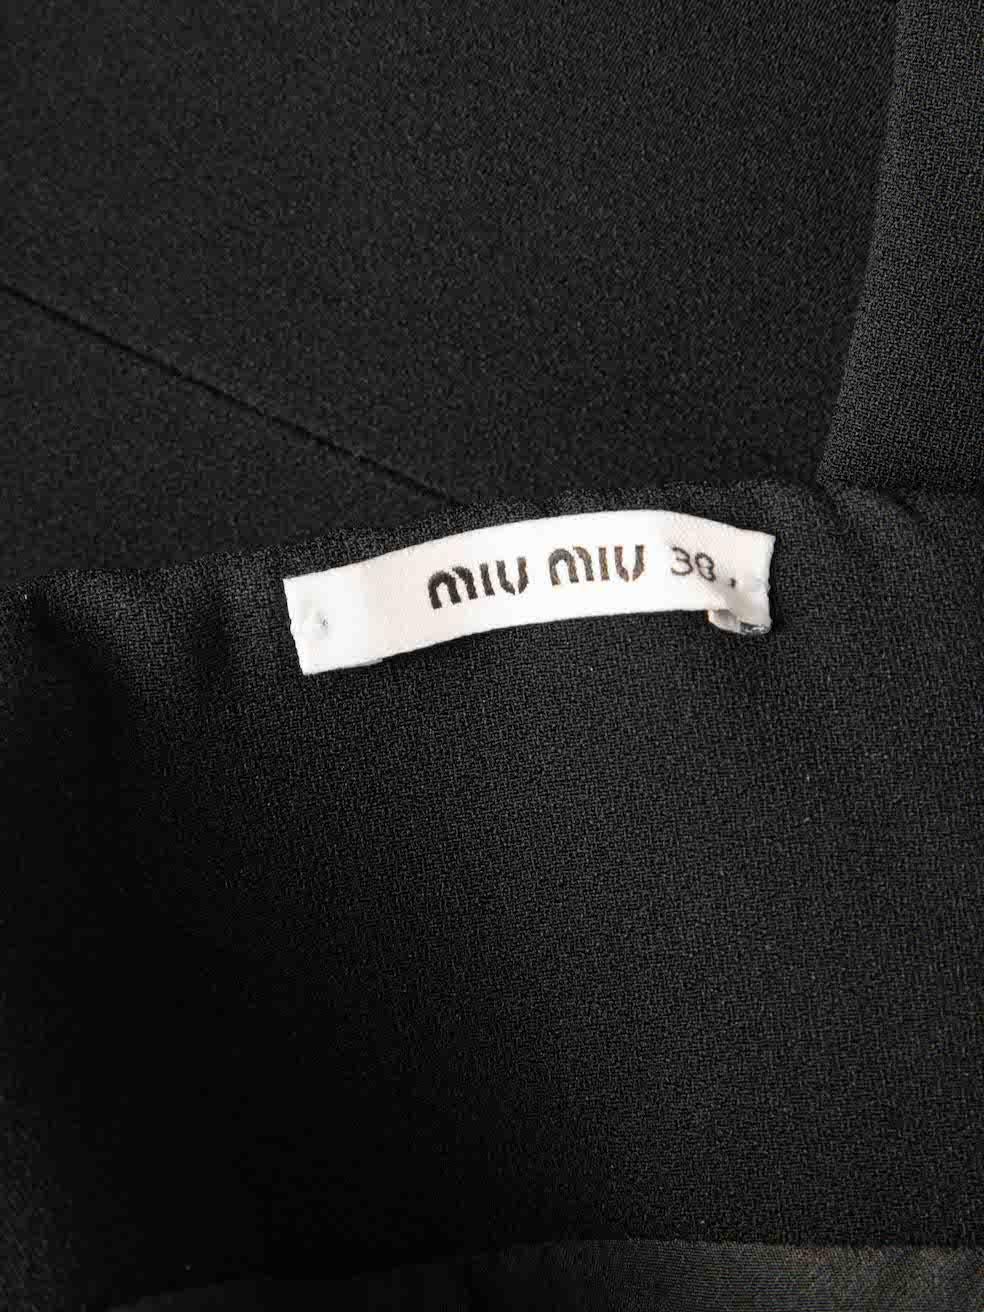 Women's Miu Miu Black Asymmetric Strapless Mini Dress Size XS